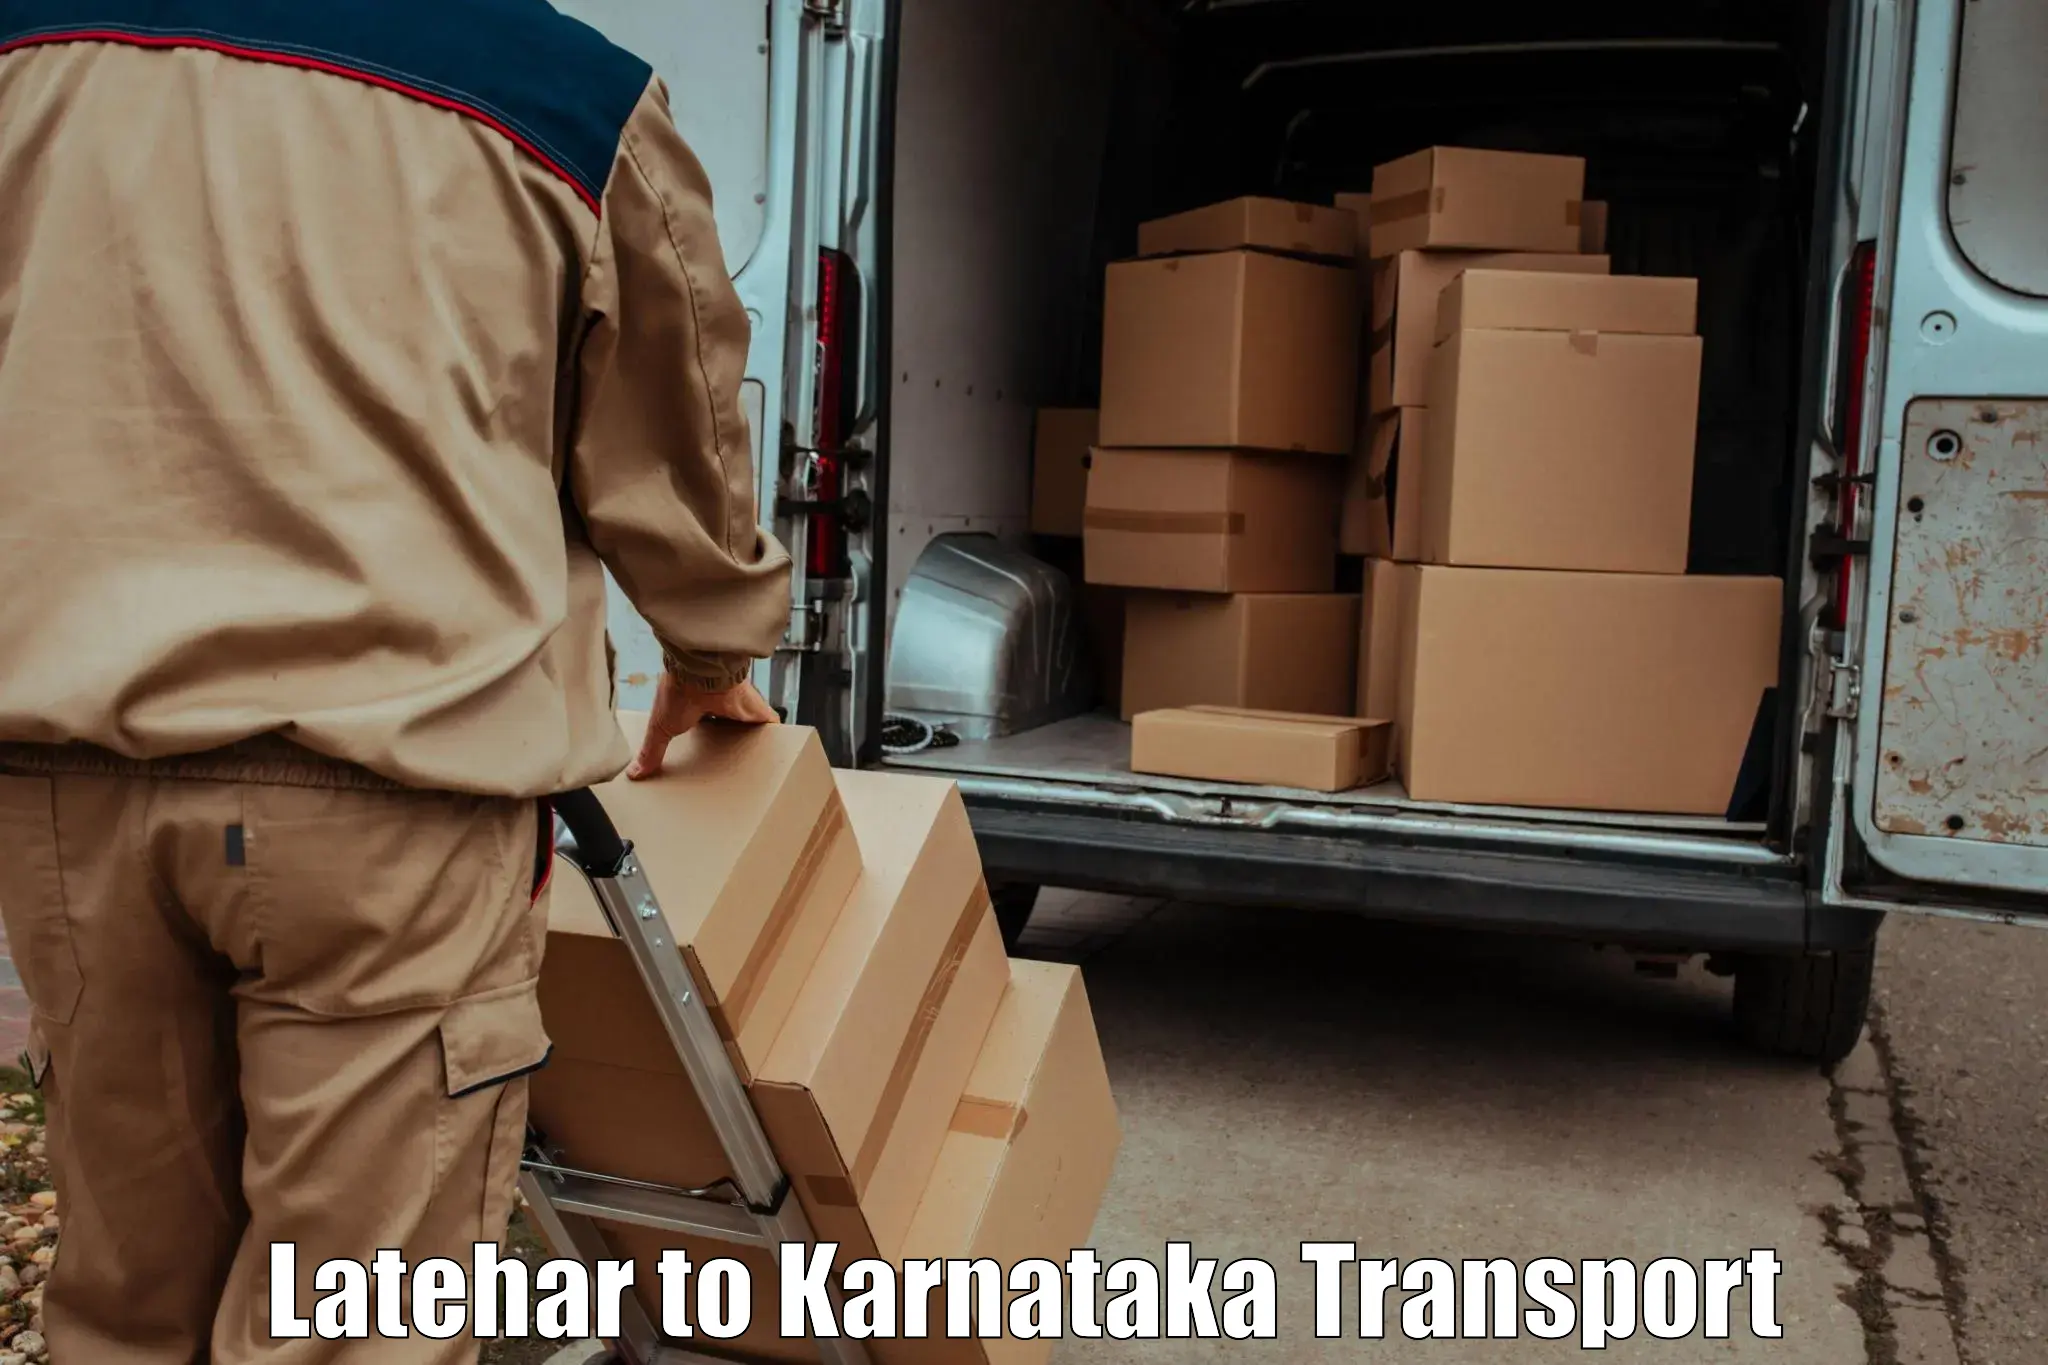 Transport in sharing Latehar to Kollegal